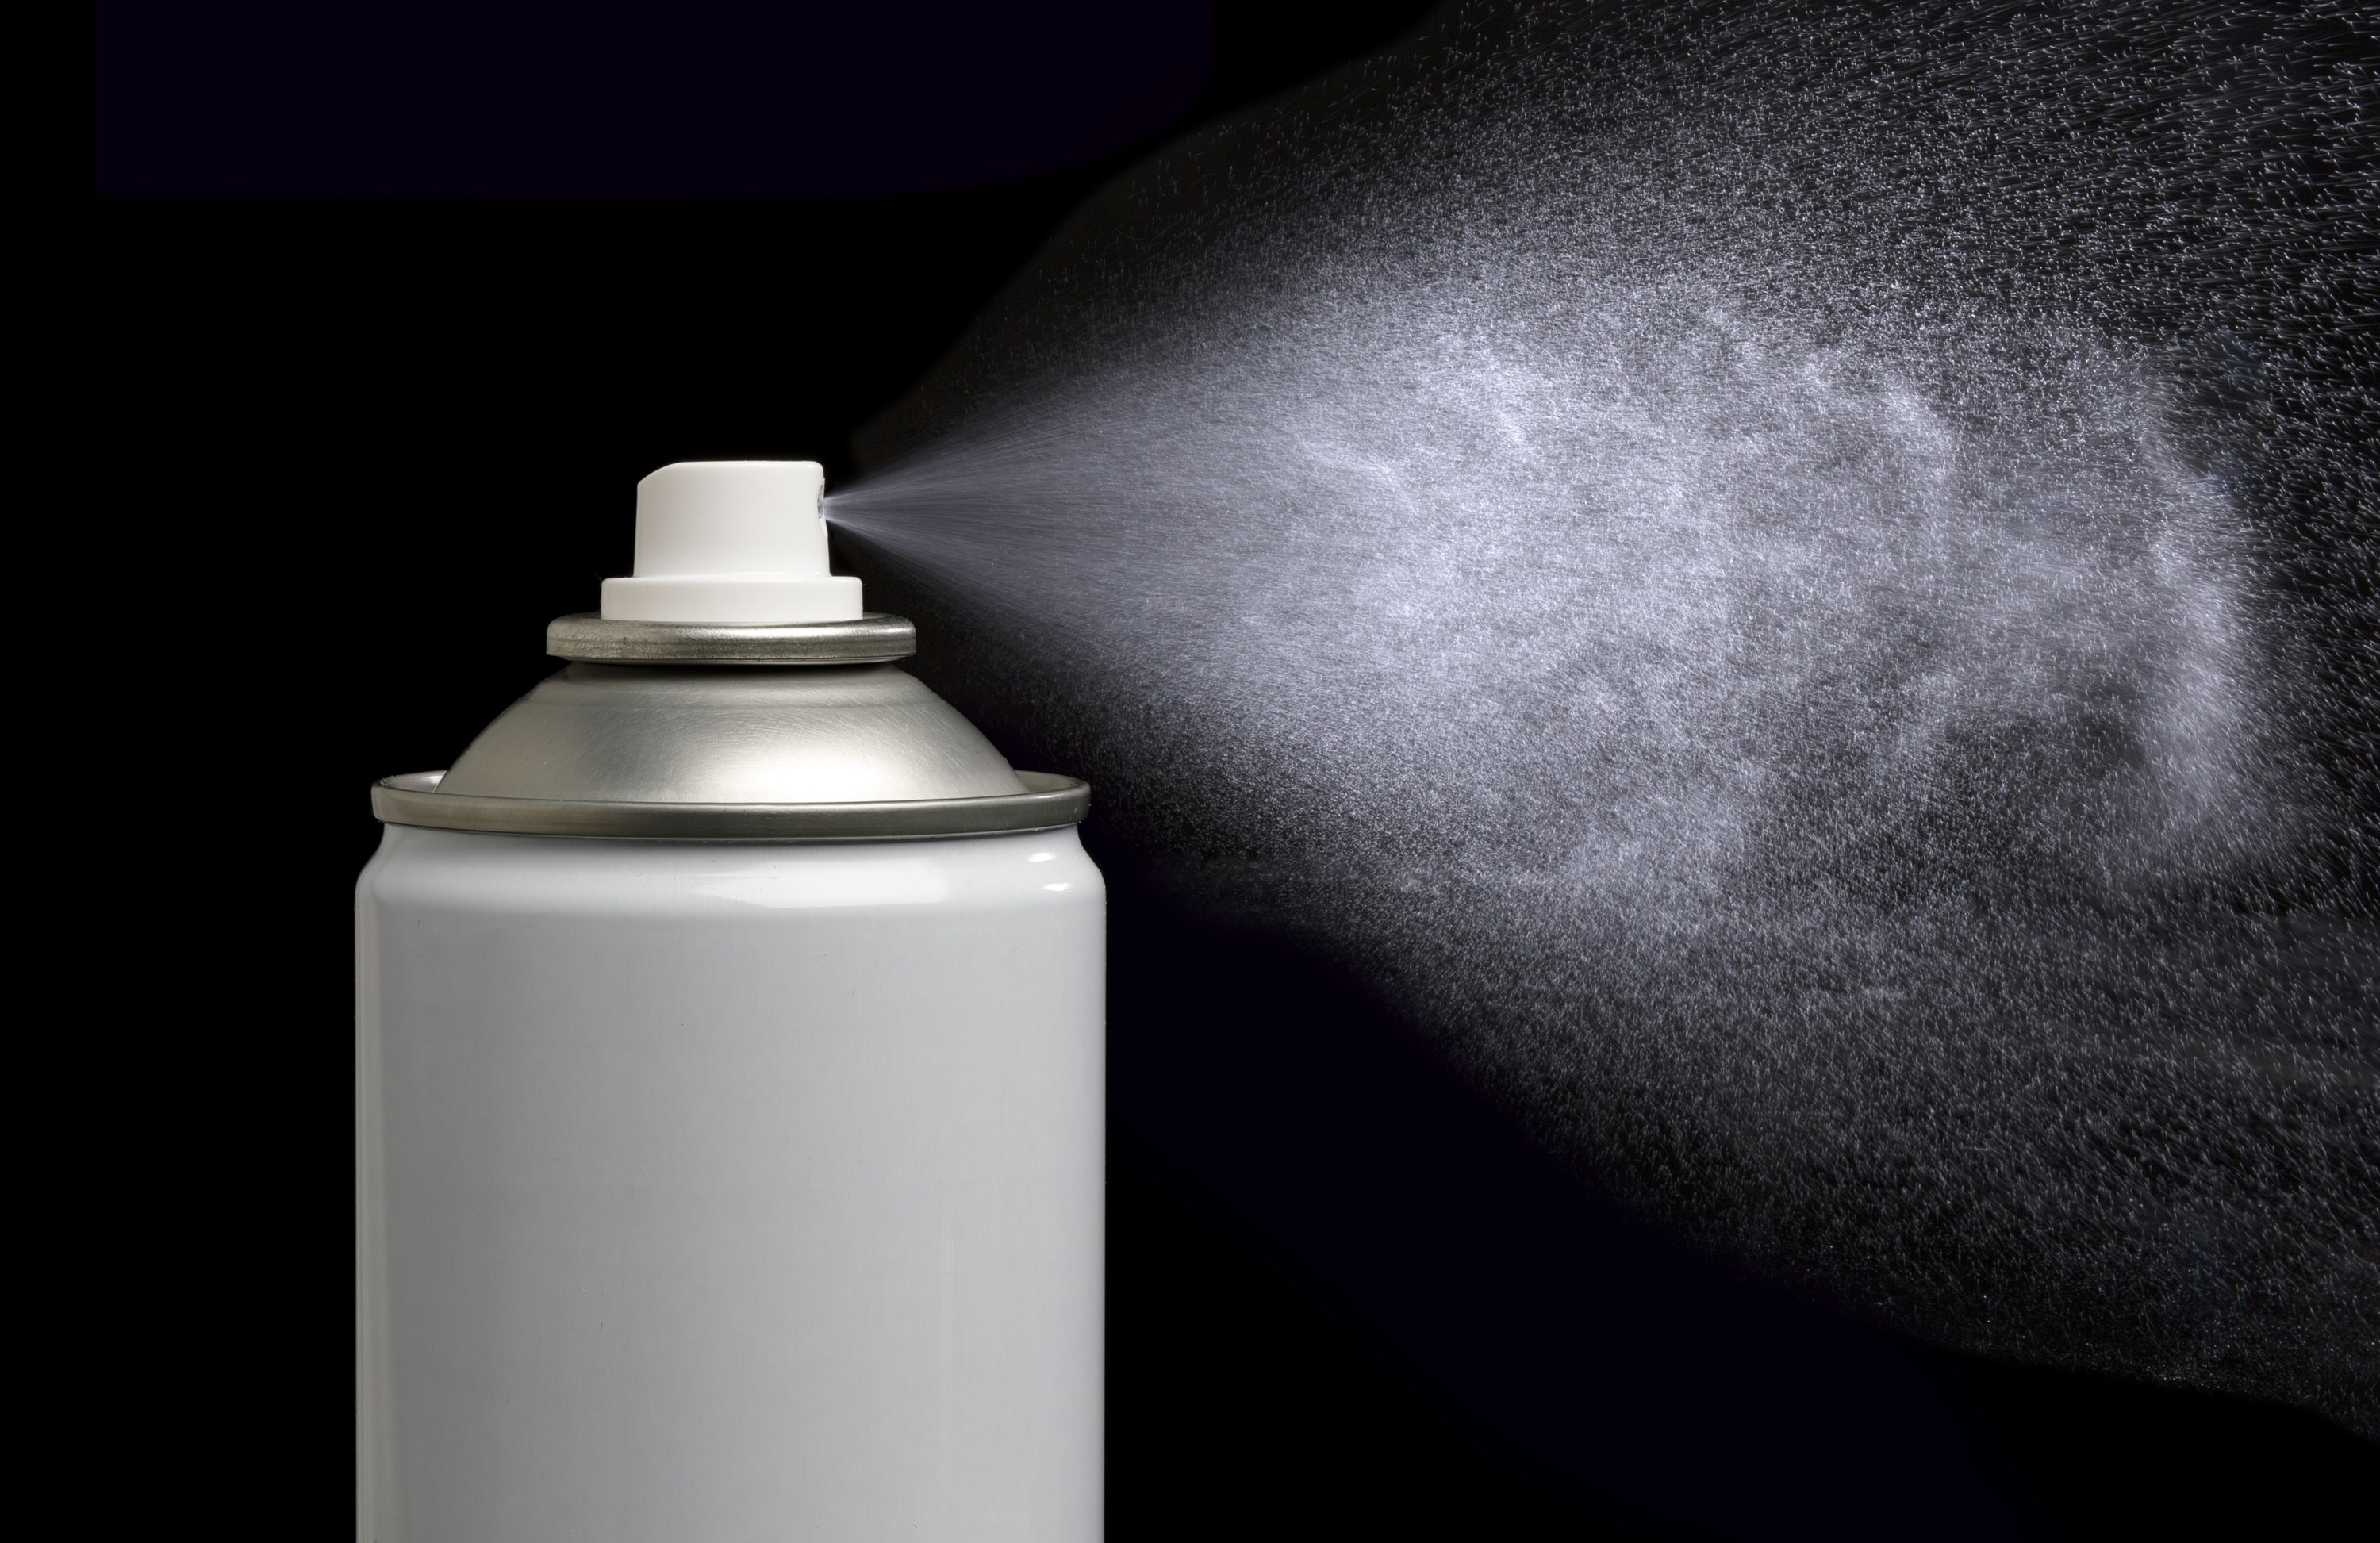 A spray can emitting a mist